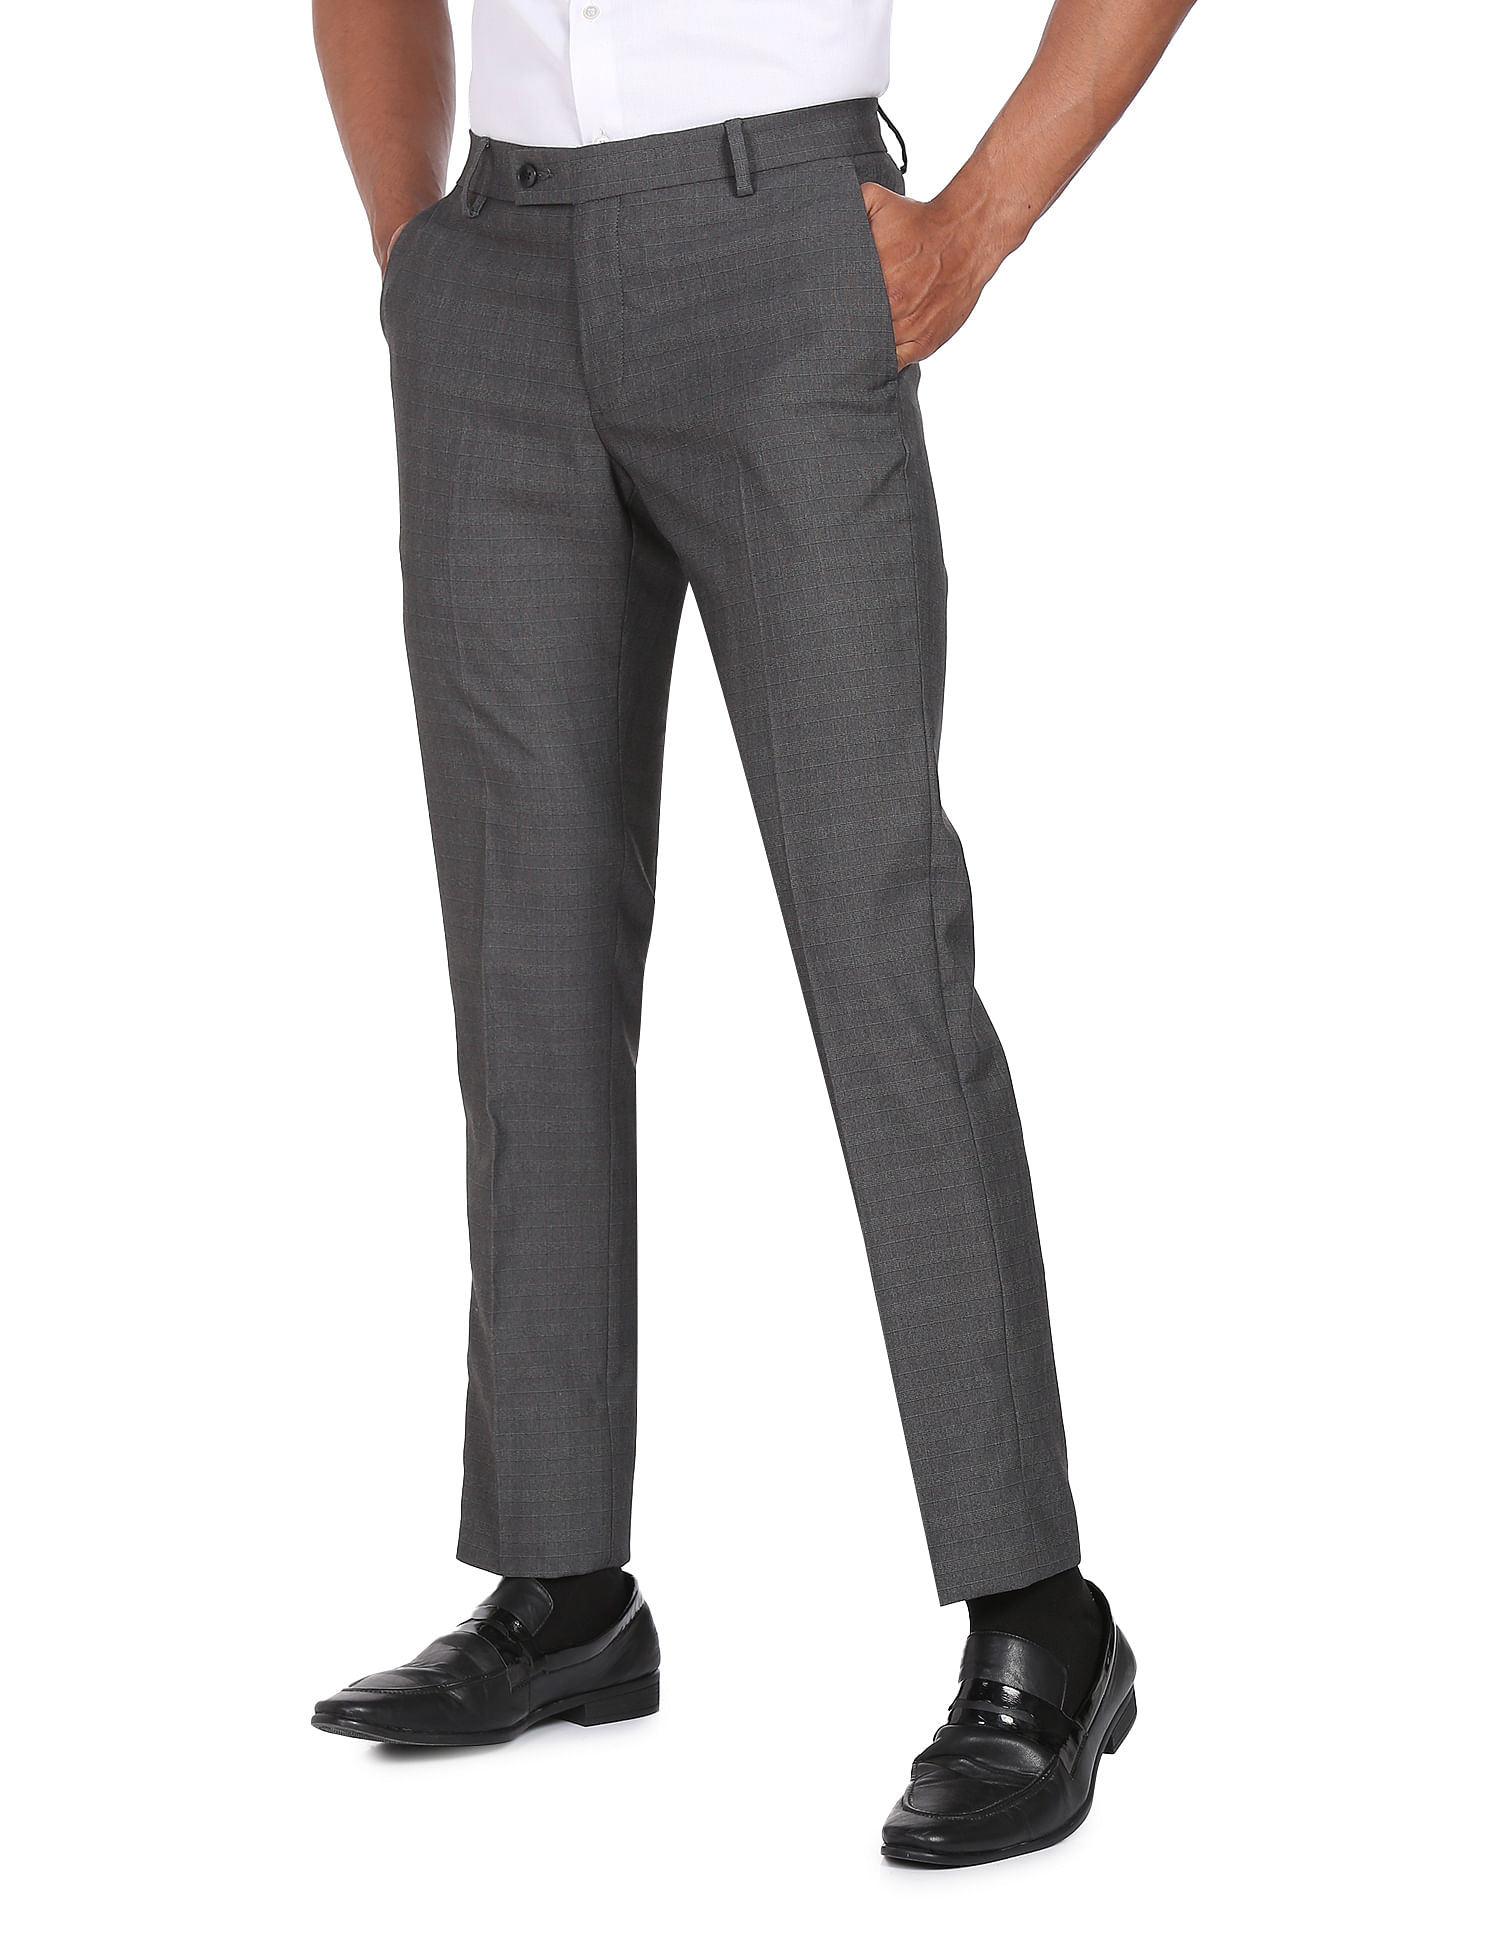 Buy The Brand ARROW Men's Regular Fit Formal Trousers/Office Wear/Stylish Slim  Fit Men Solid Trouser/Formal Dark Blue at Amazon.in